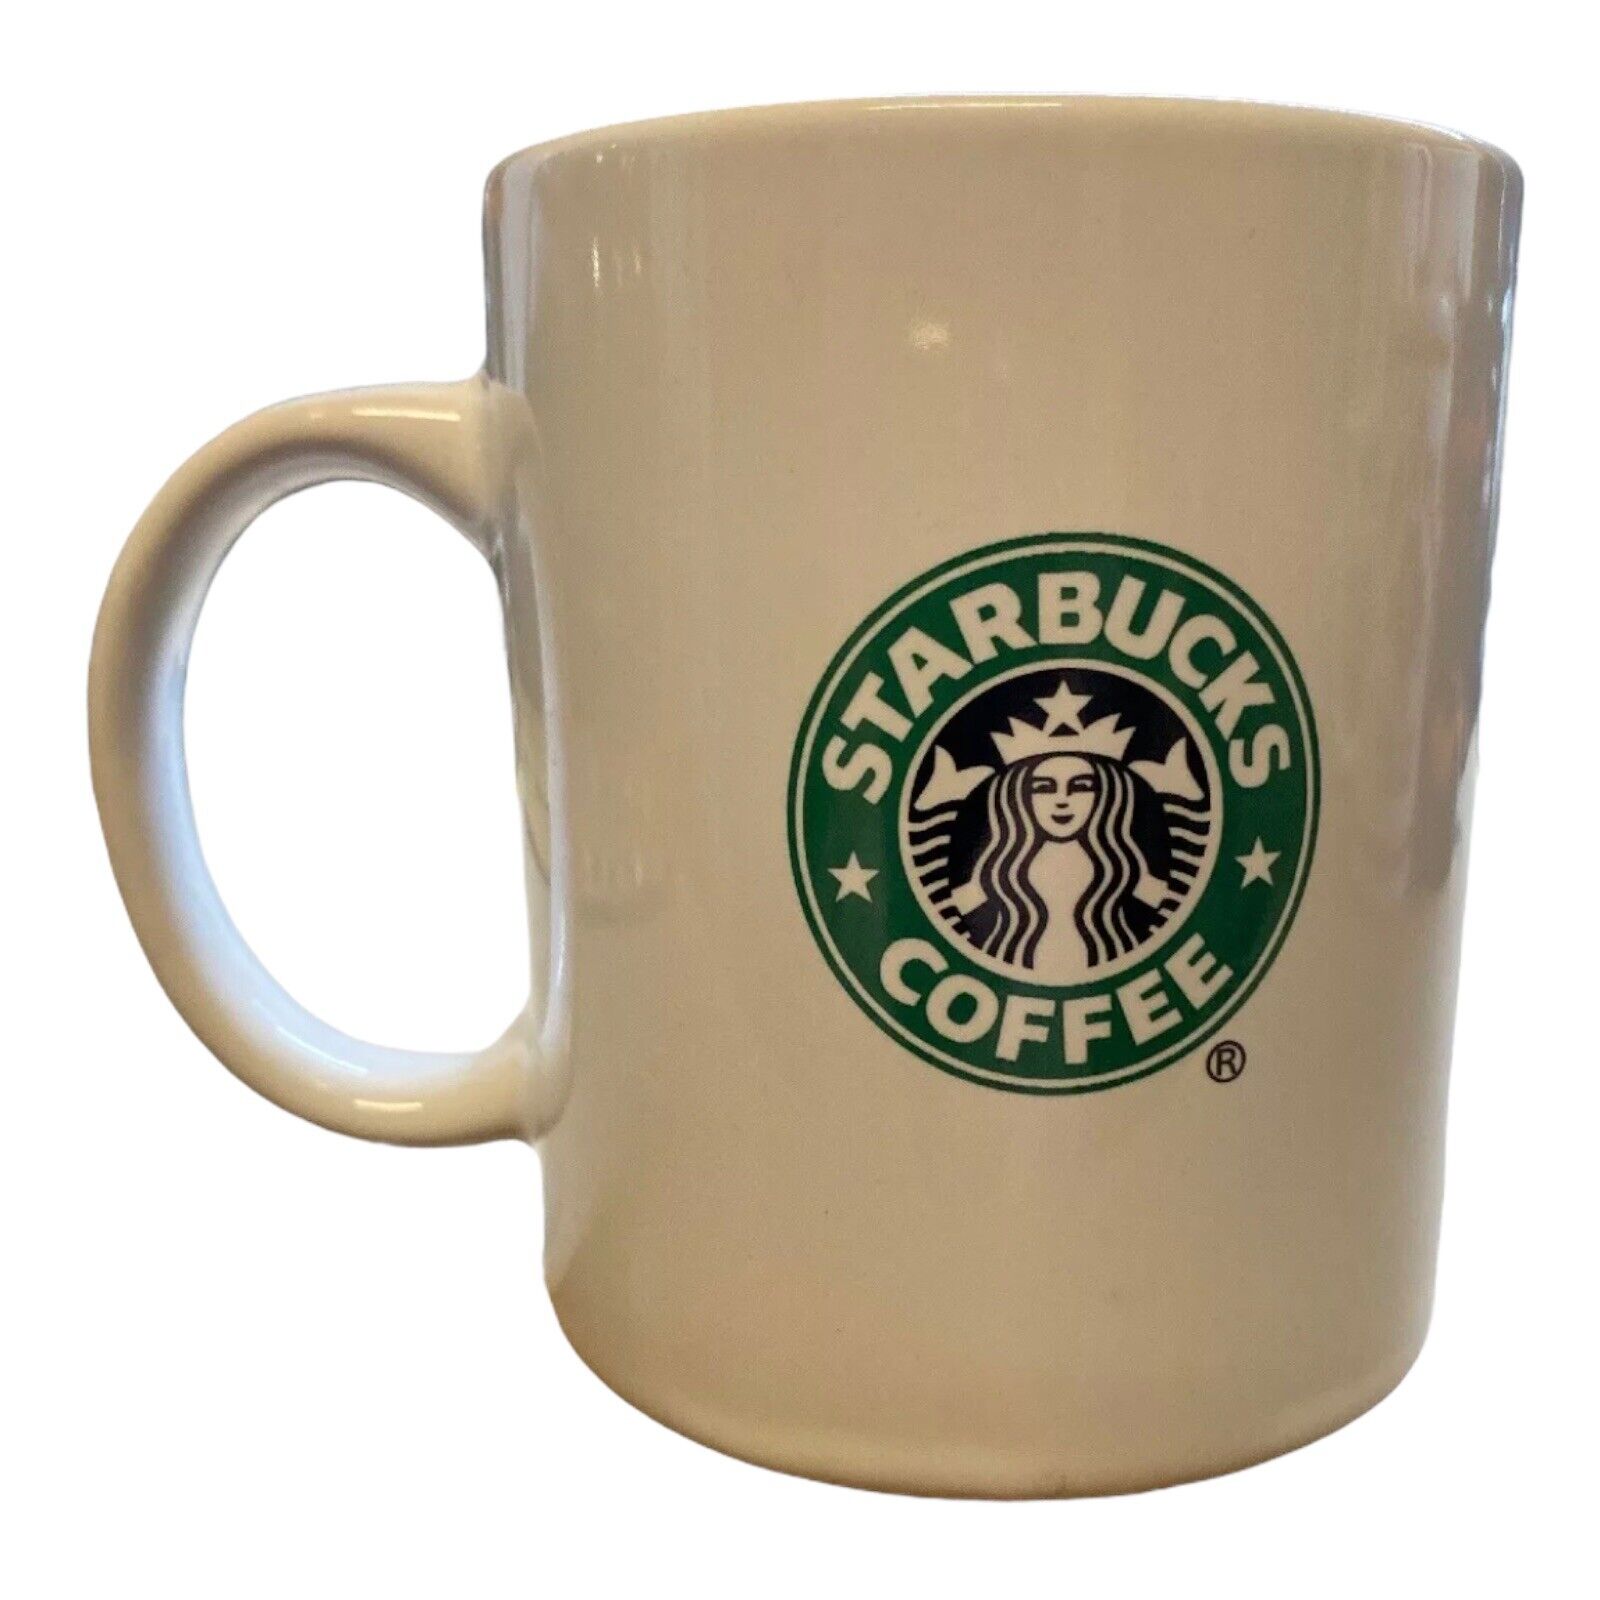 Starbucks Coffee Mug Cup Logo Green & Black On White 2009 11 oz Original Design